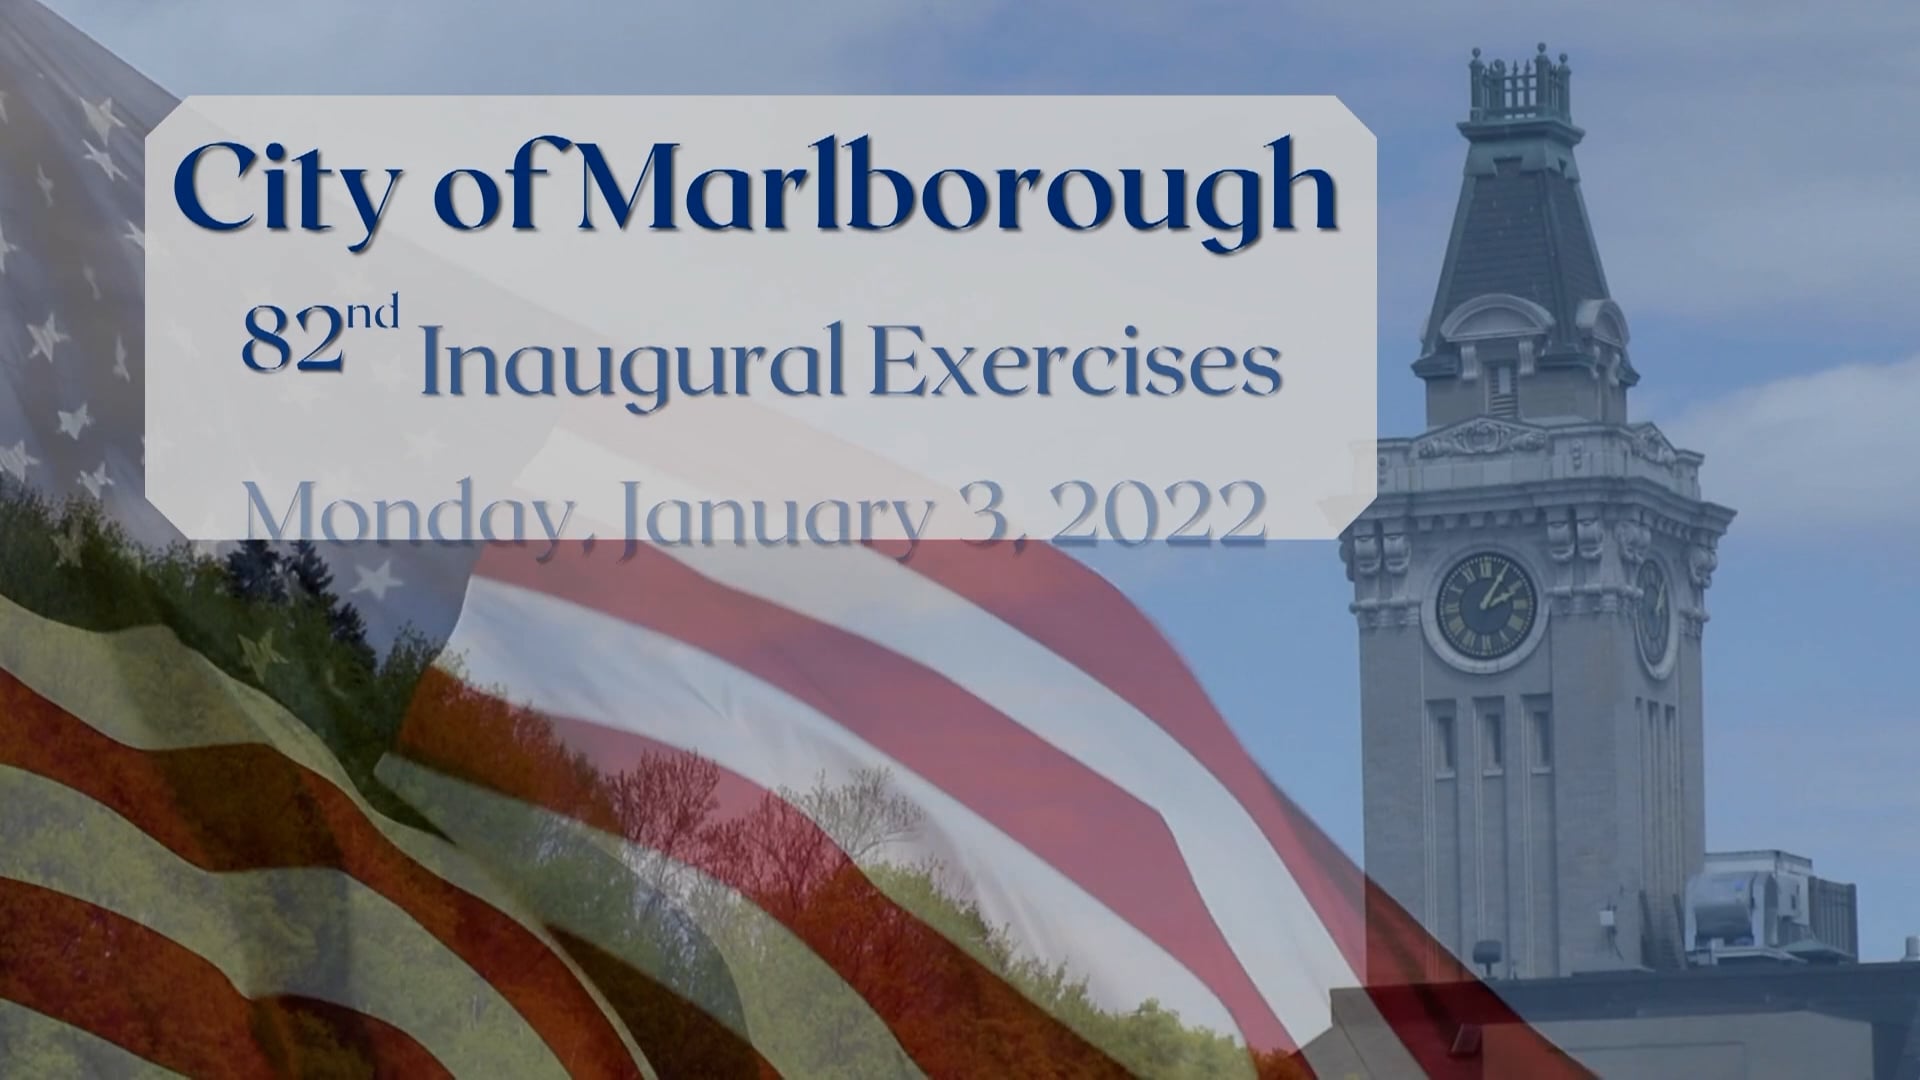 City of Marlborough 82nd Inaugural Exercises